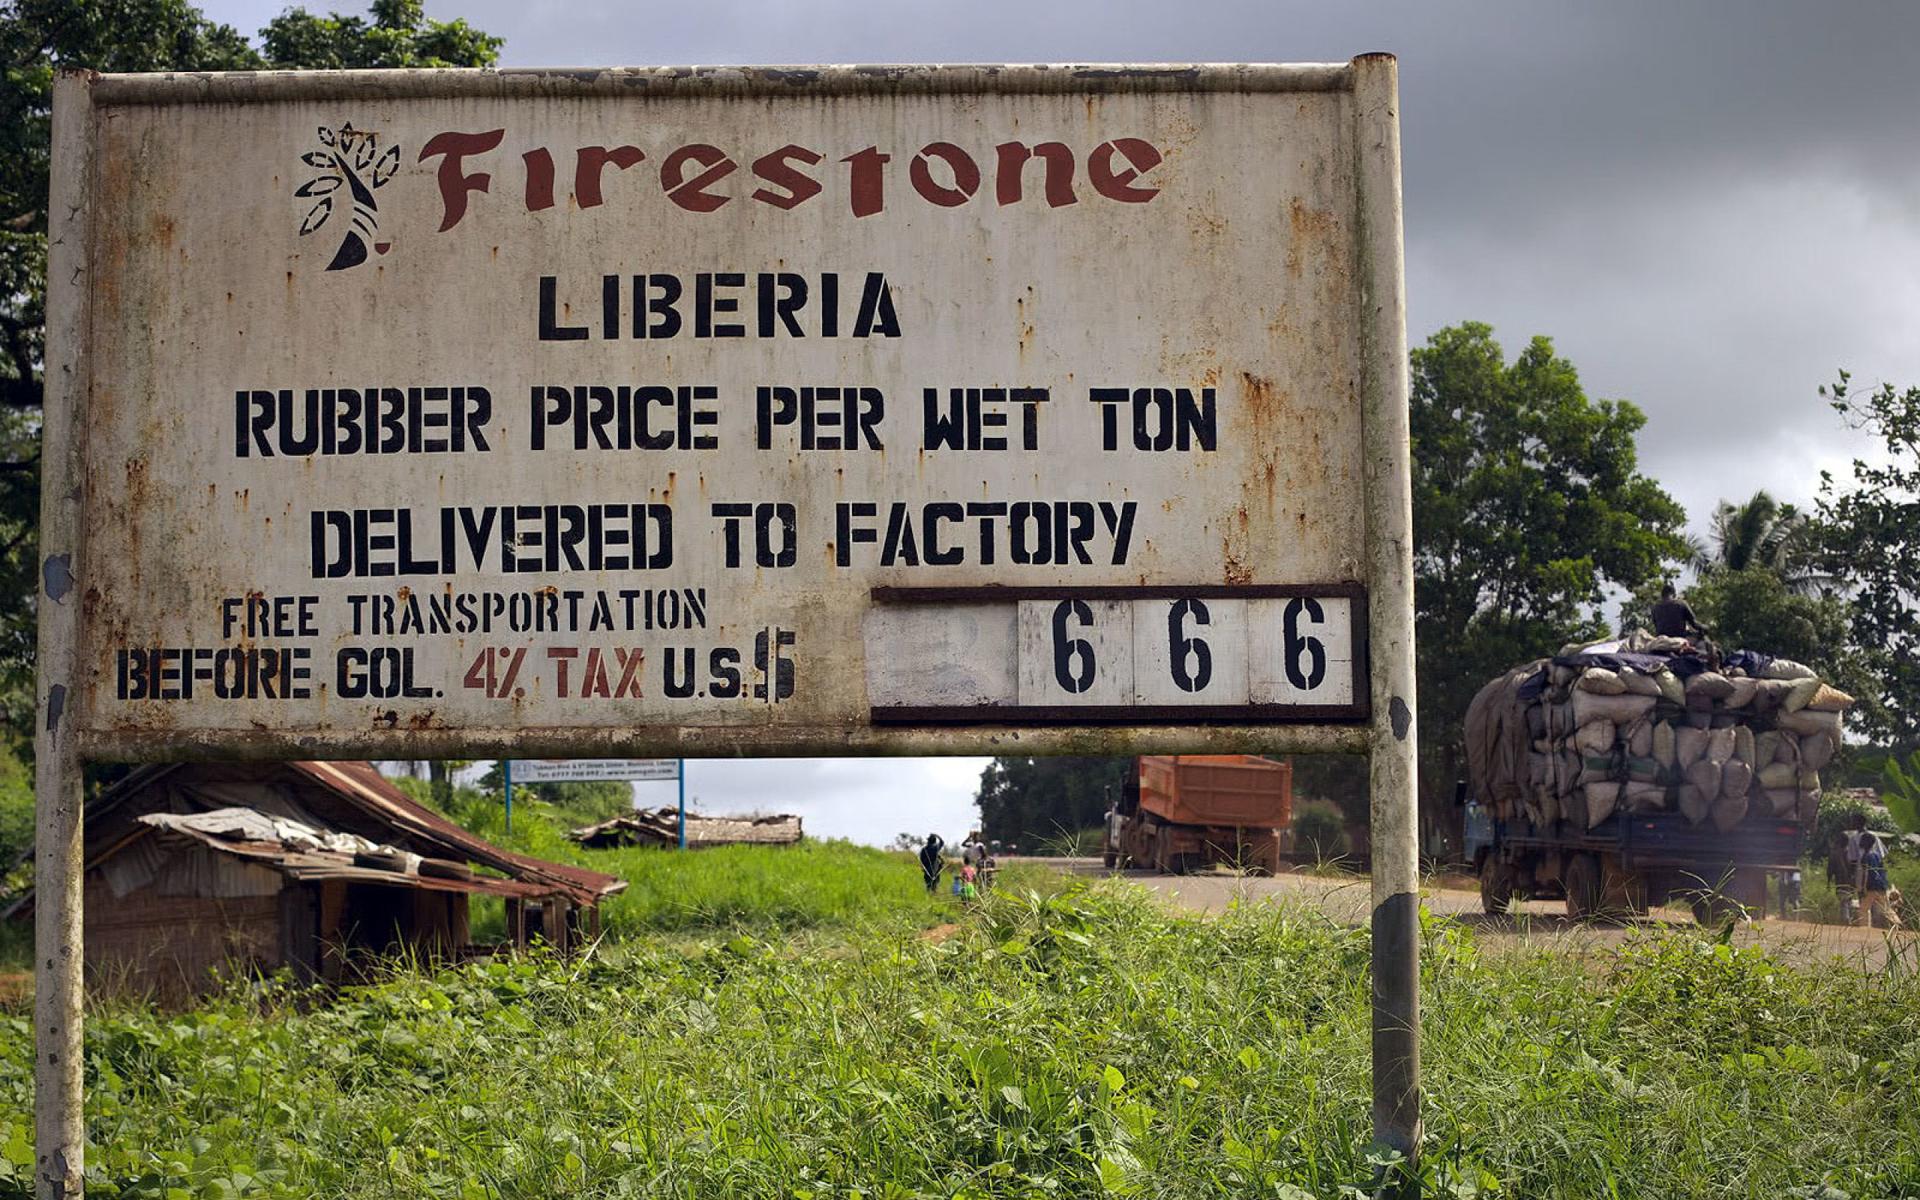 Firestone has operated a rubber plantation in Liberia since 1926.